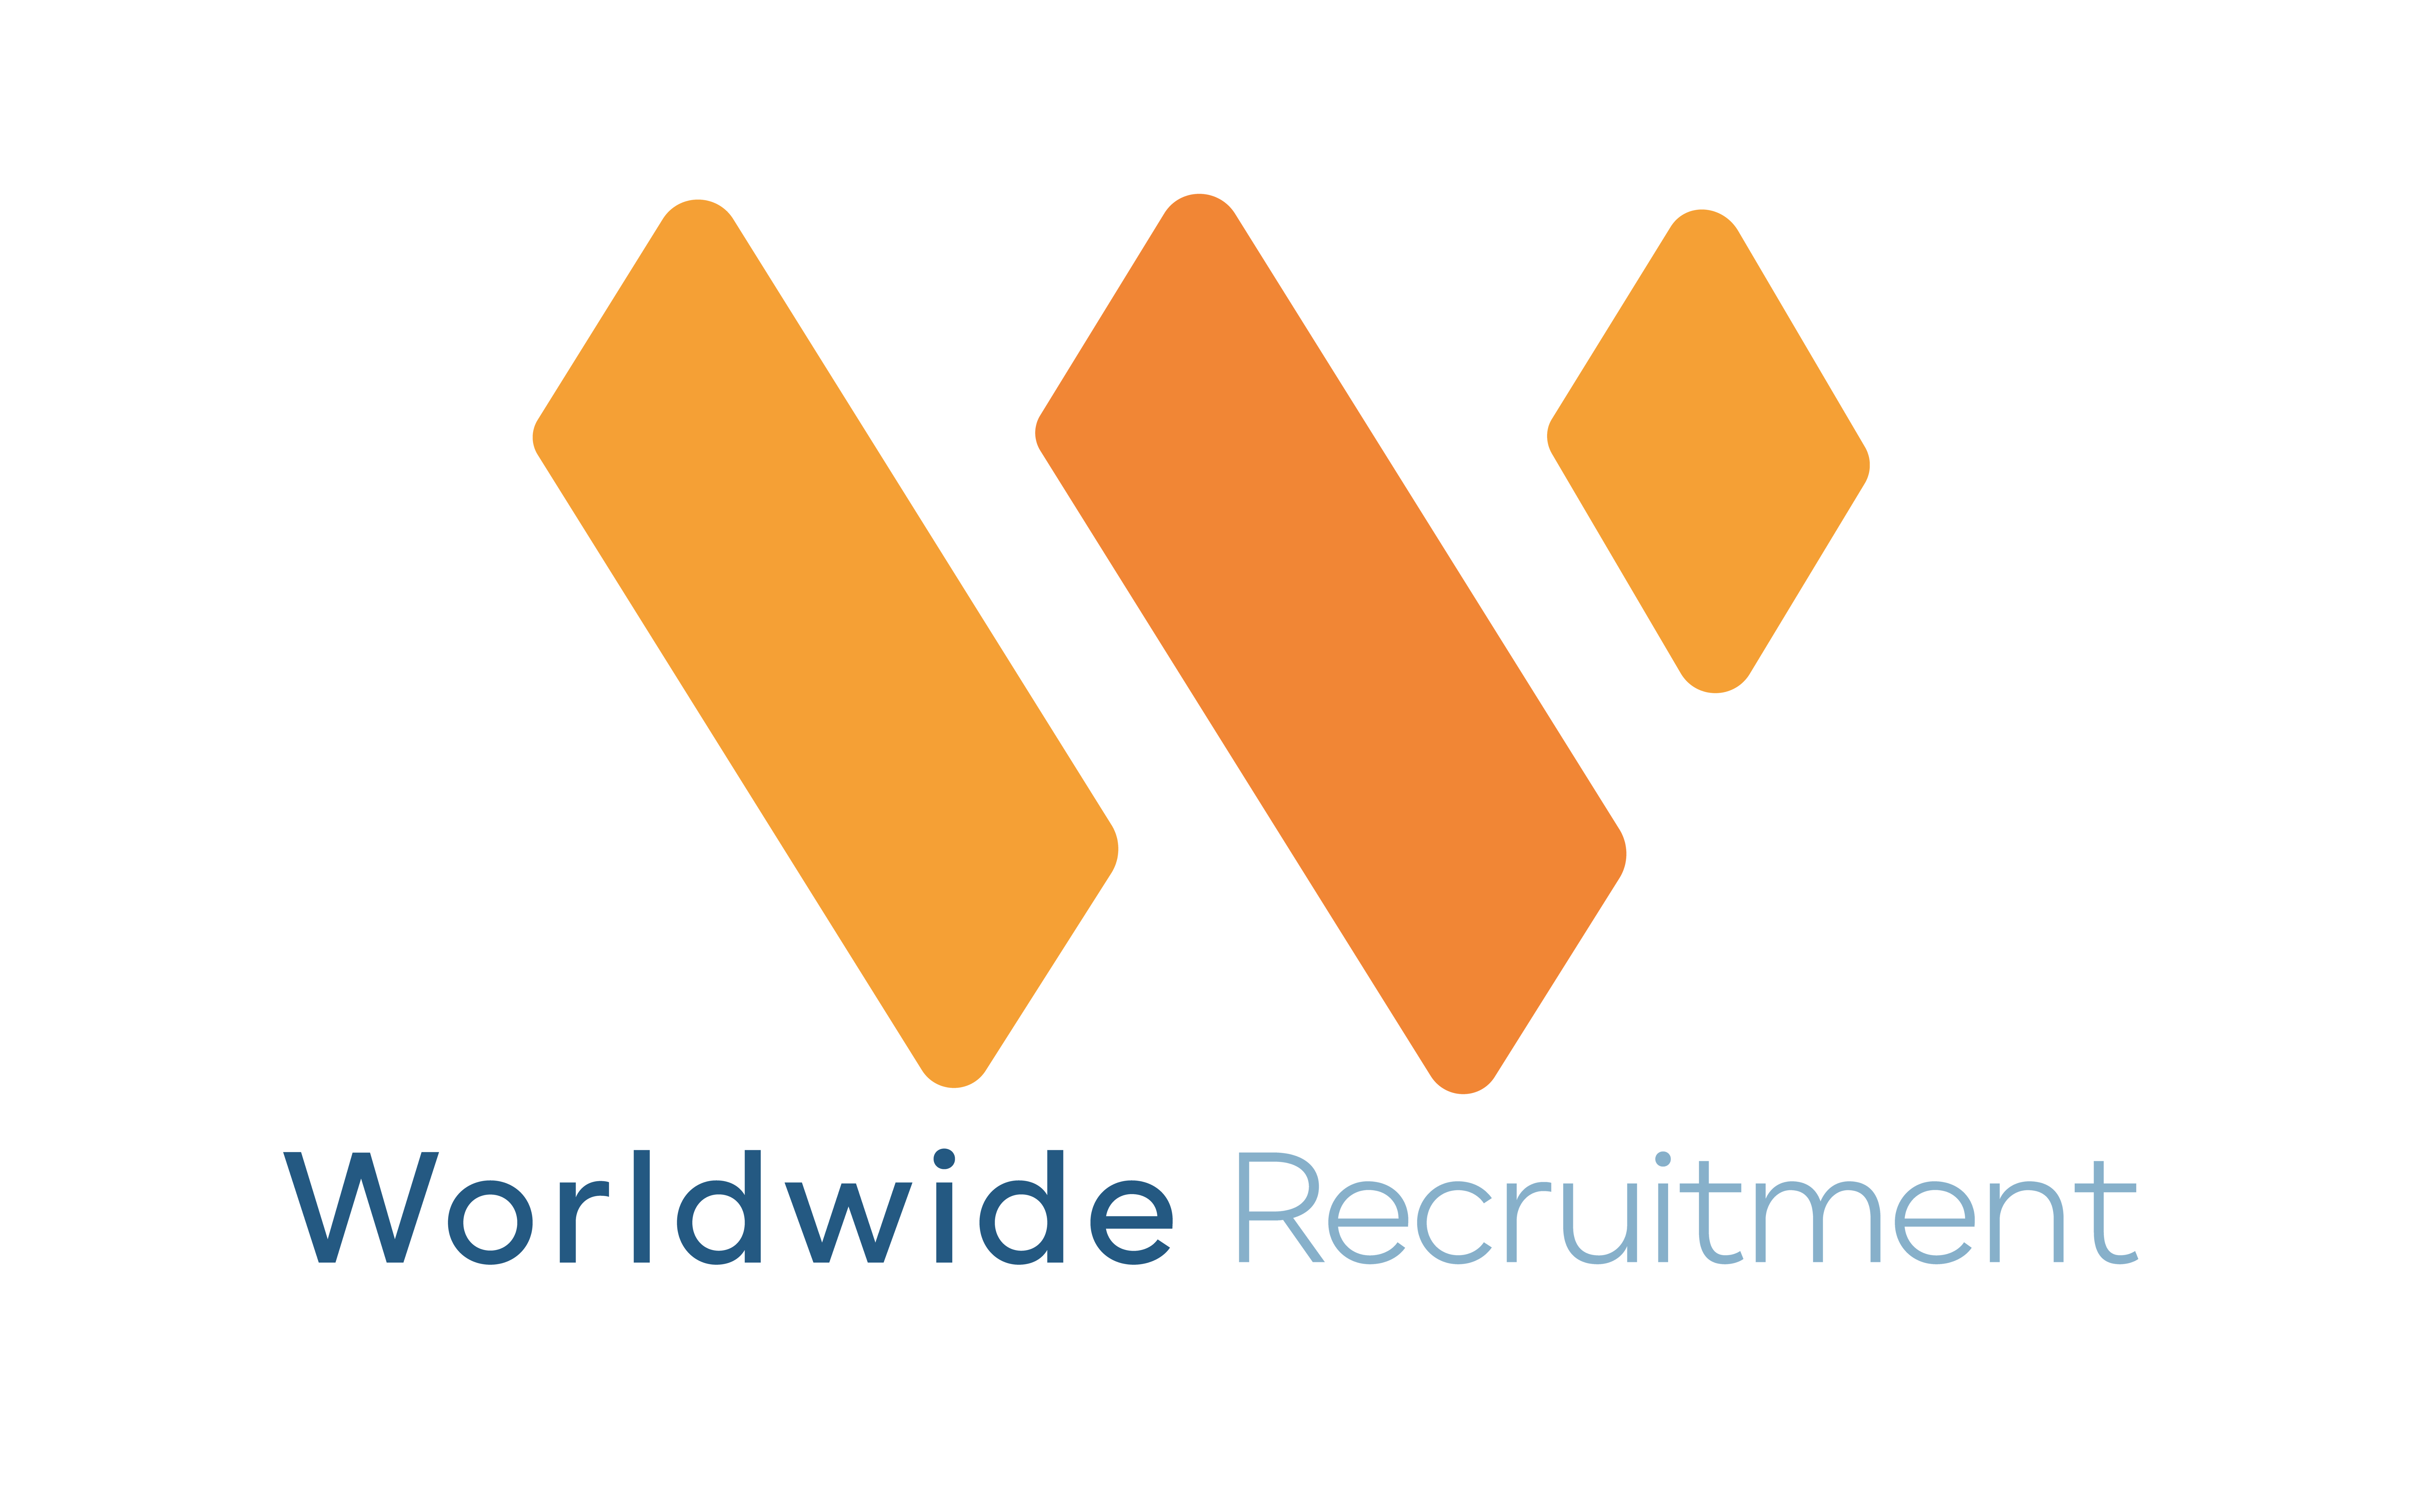 Worldwide recruitment